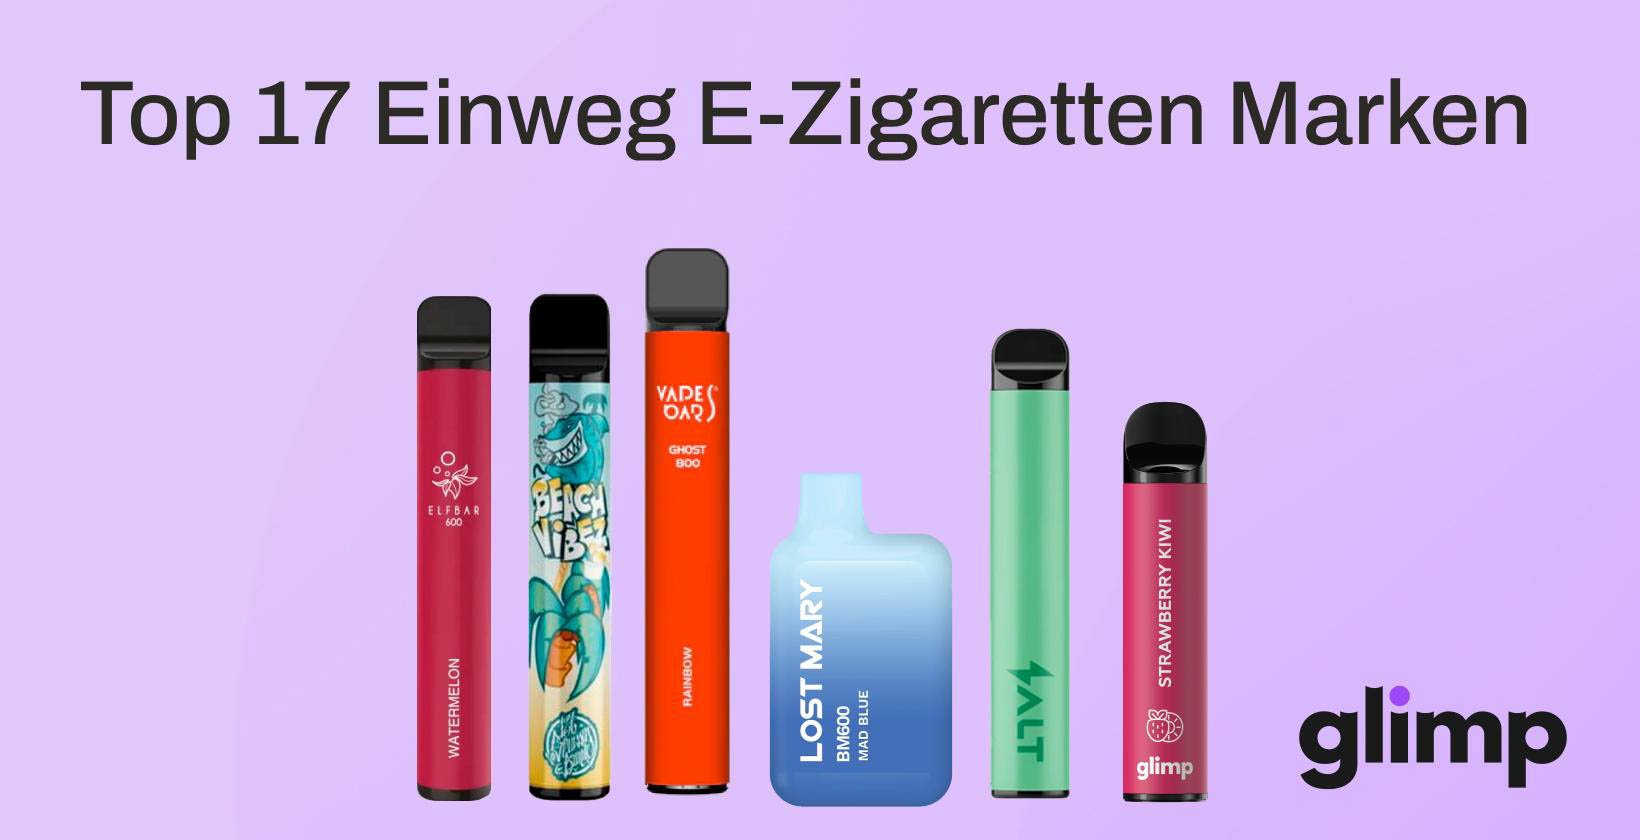 Top 17 Einweg E-Zigaretten Marken